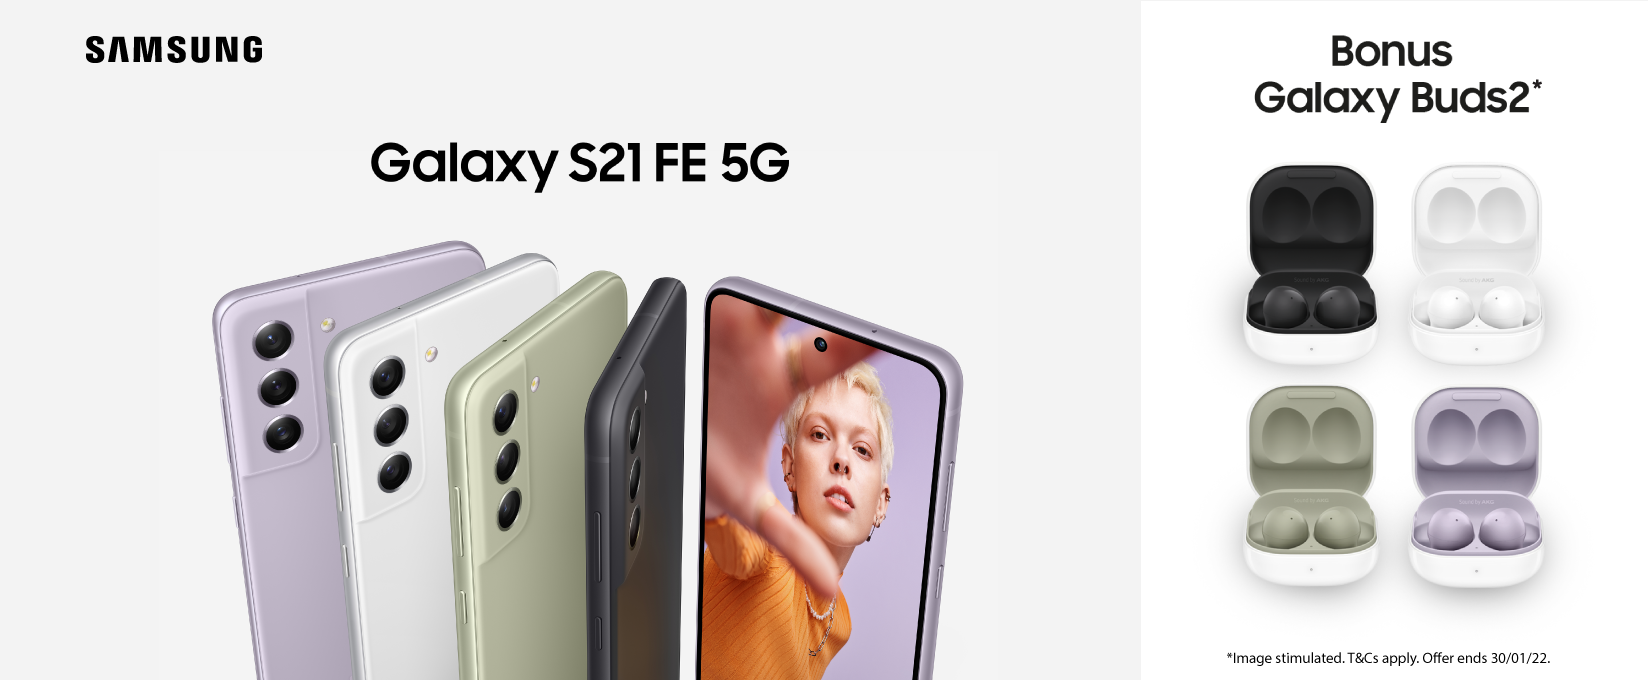 Bonus Galaxy Buds2 With The New Samsung Galaxy S21 FE 5G